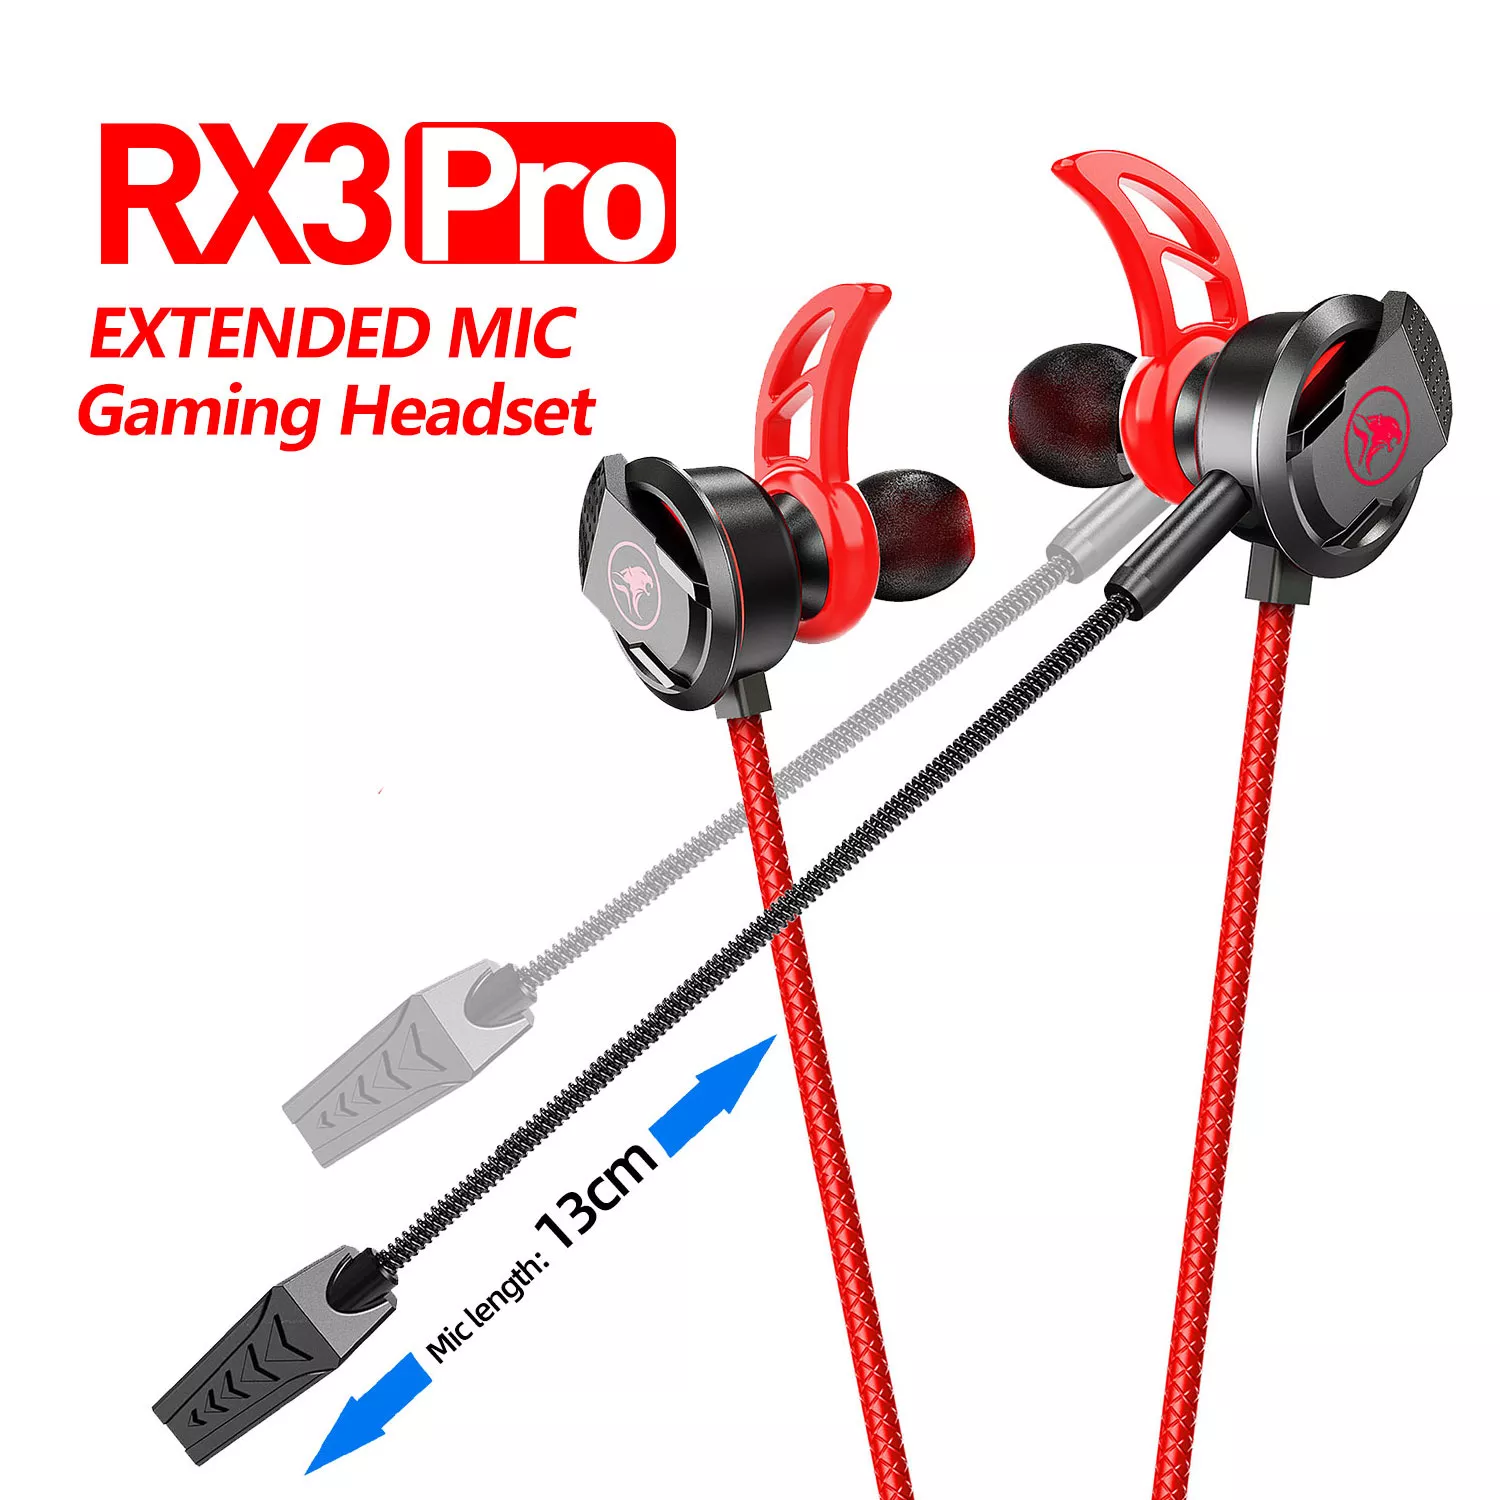 Original Mowi RX3 Pro Gaming Headset Microphone Headphone Earphones